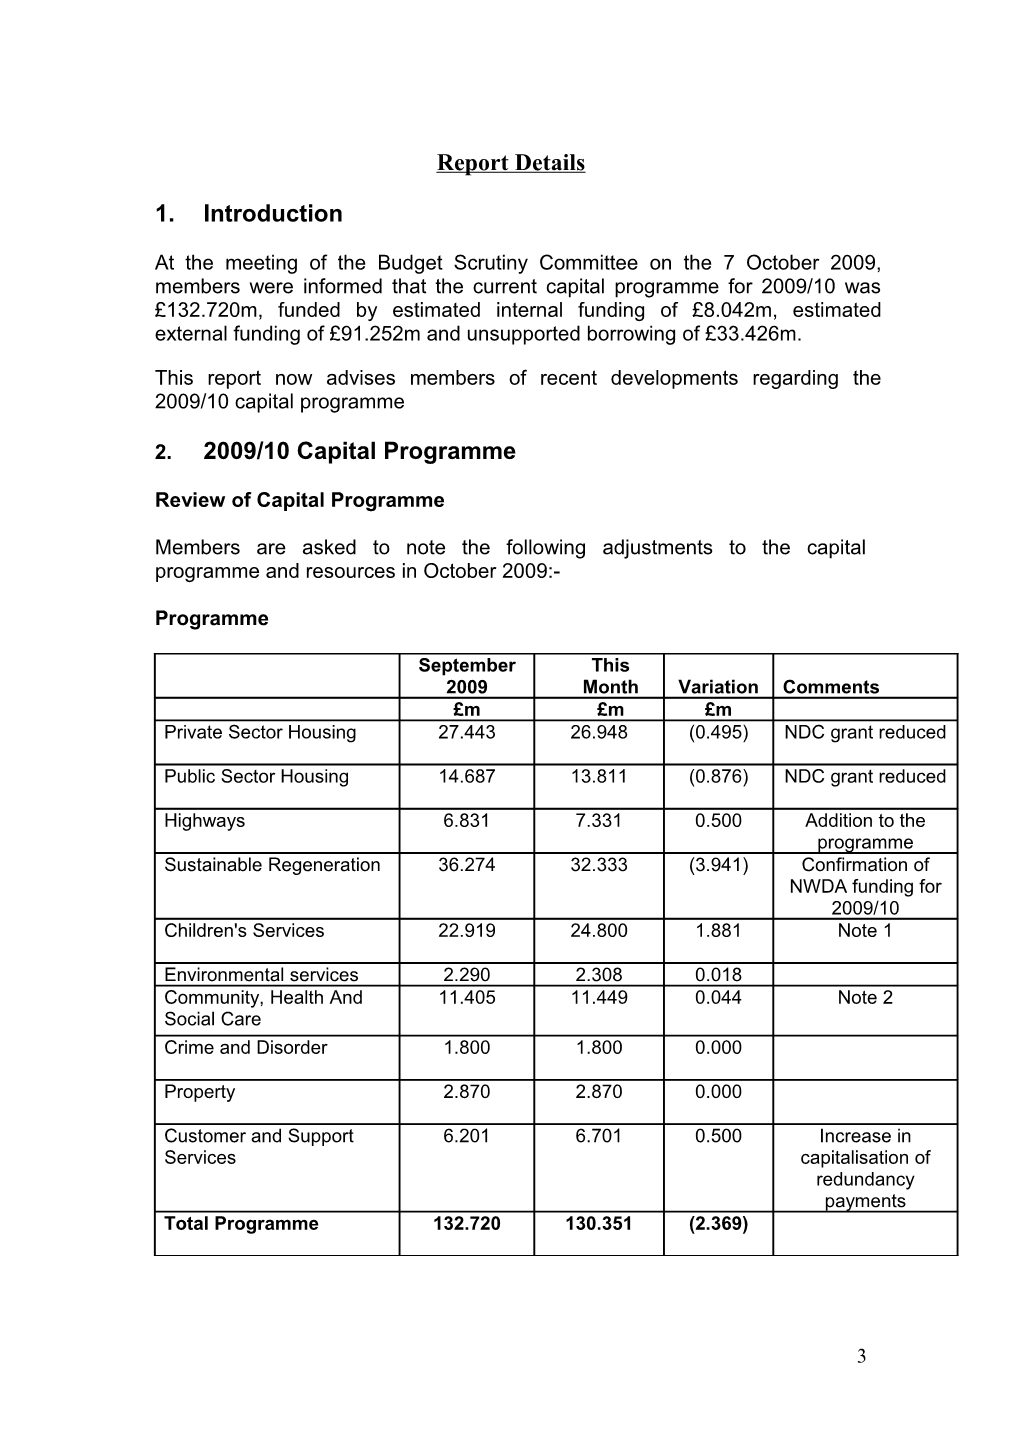 This Report Now Advises Members of Recent Developments Regarding the 2009/10 Capital Programme